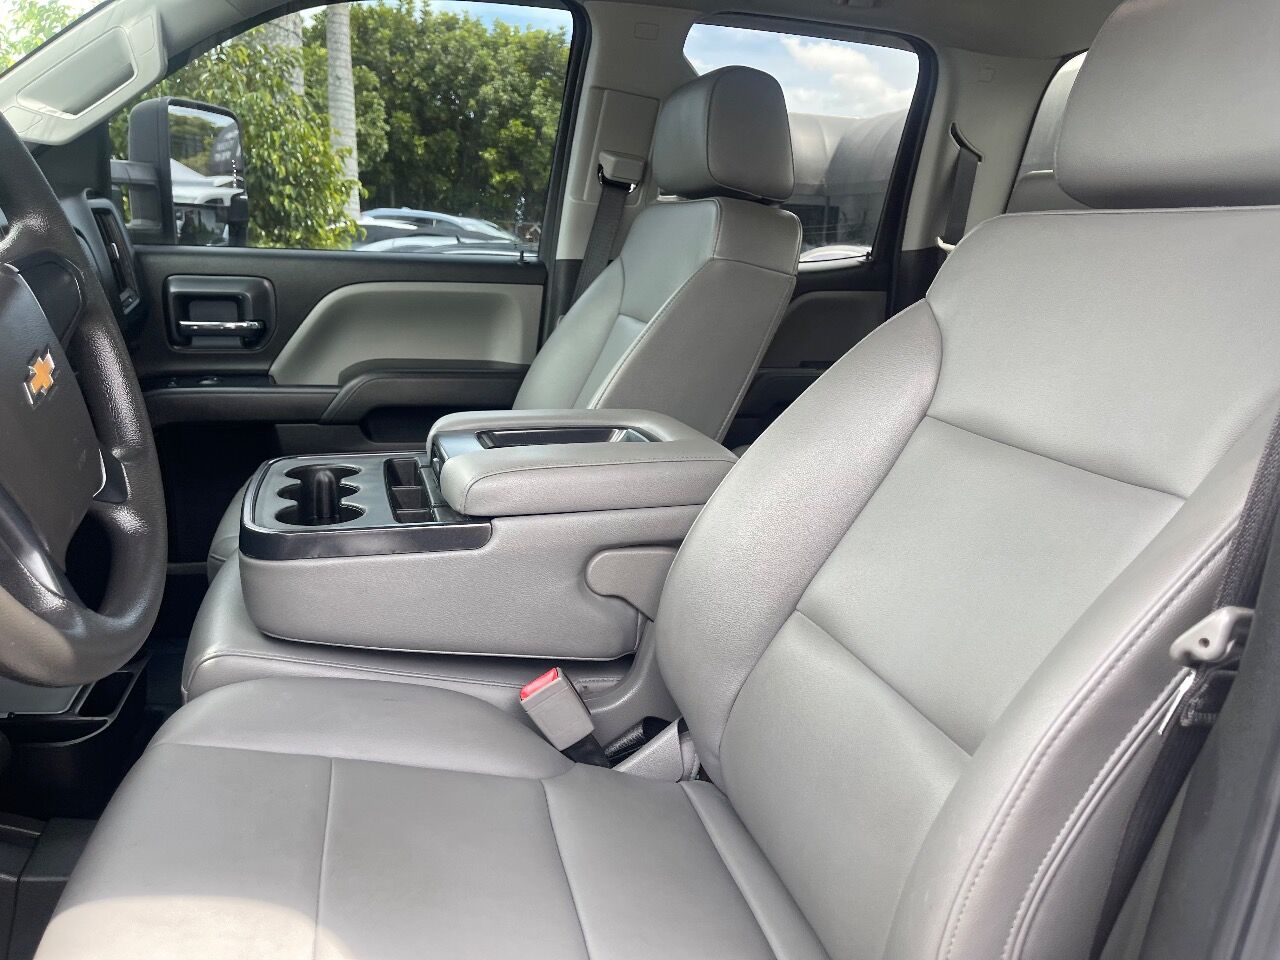 2019 Chevrolet Silverado HD Pickup - $37,900